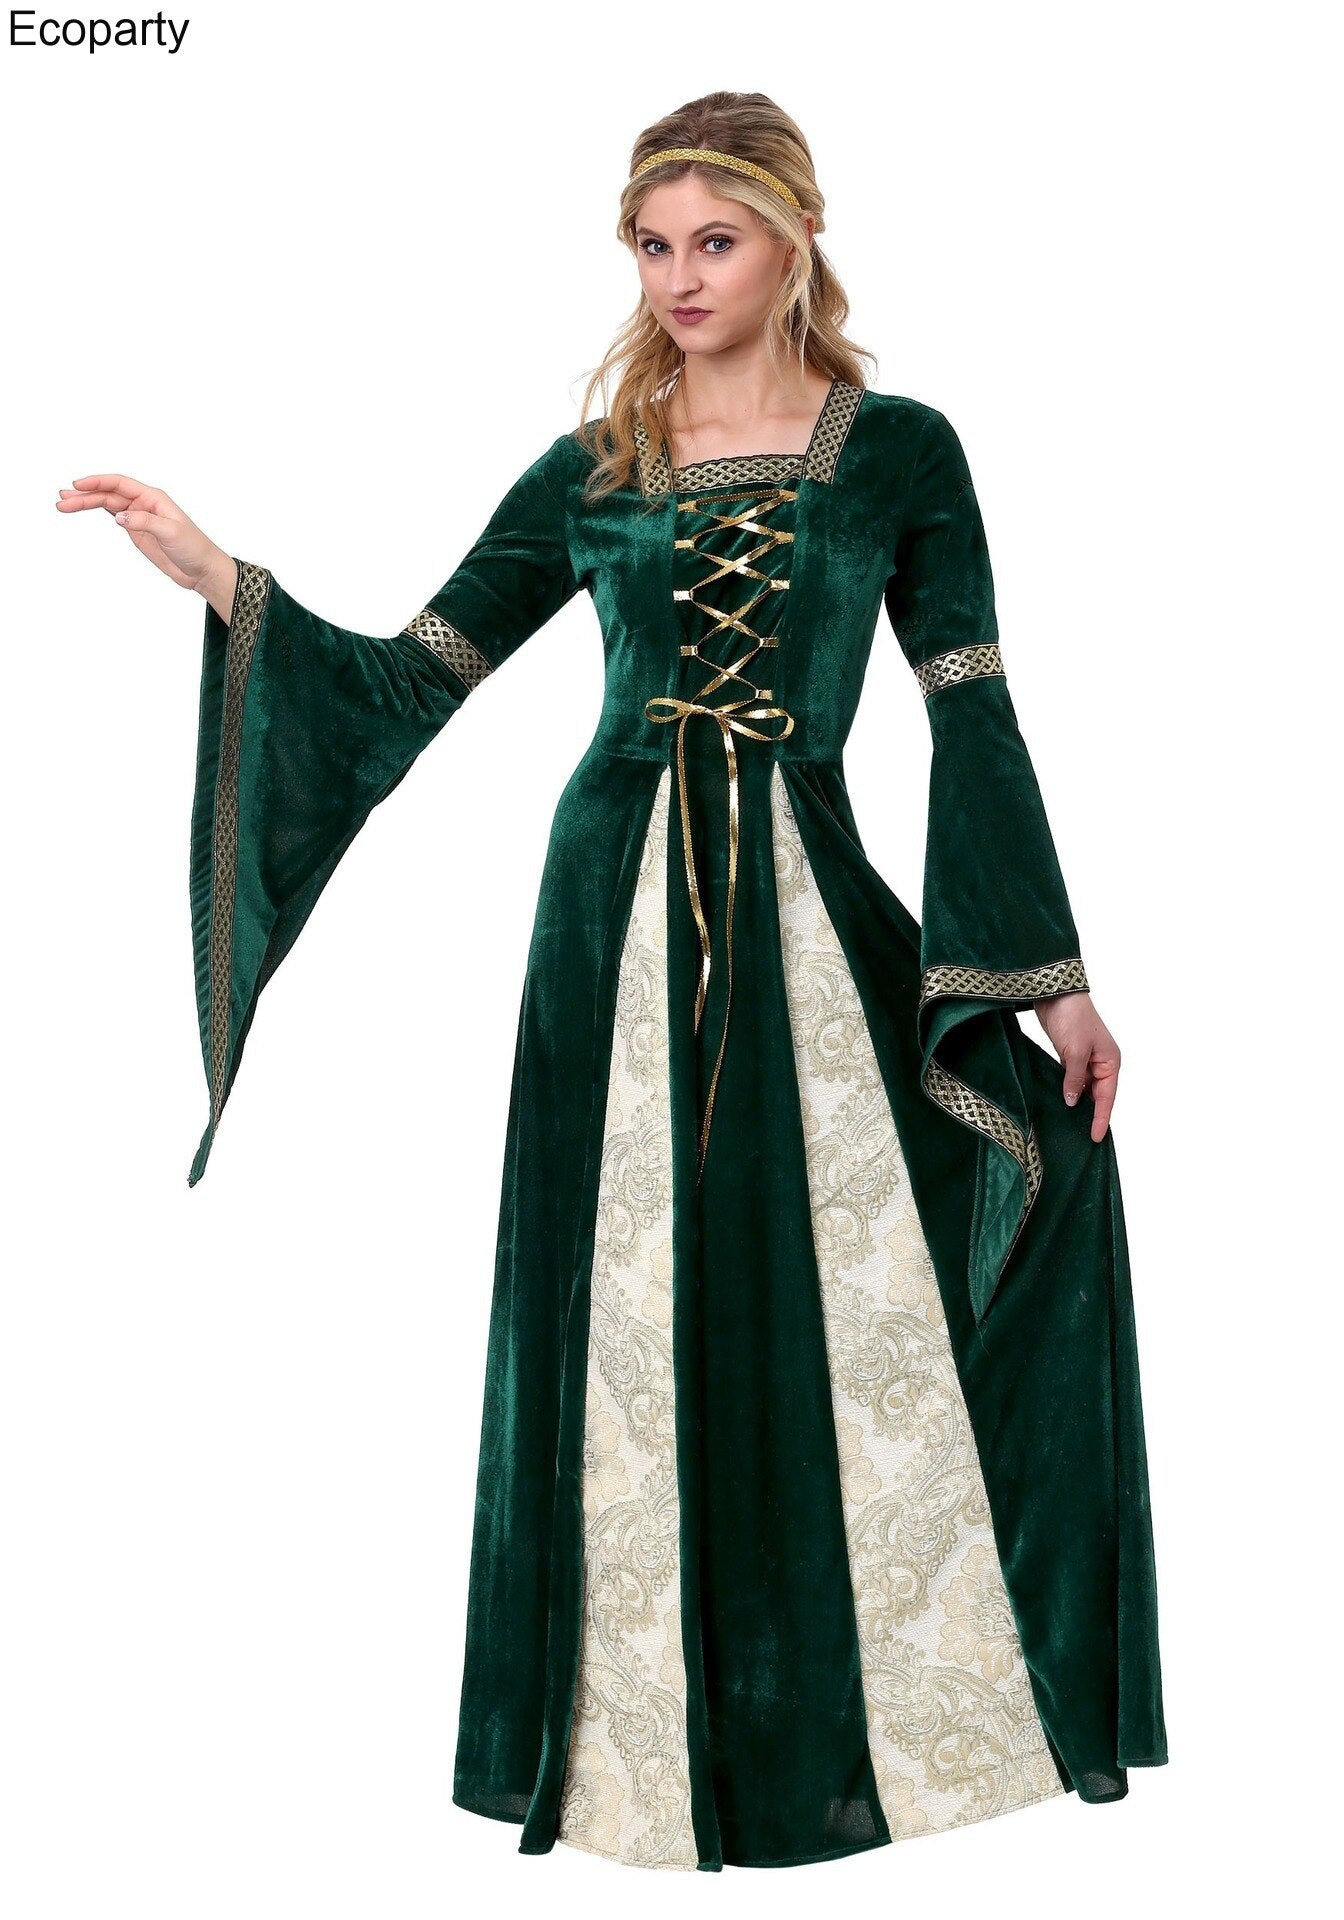 Retro Medieval Costume Dark Green Aristocratic Palace Dress Halloween Costume Adult Stage Performance Clothing Dress+Headband - kmtell.com